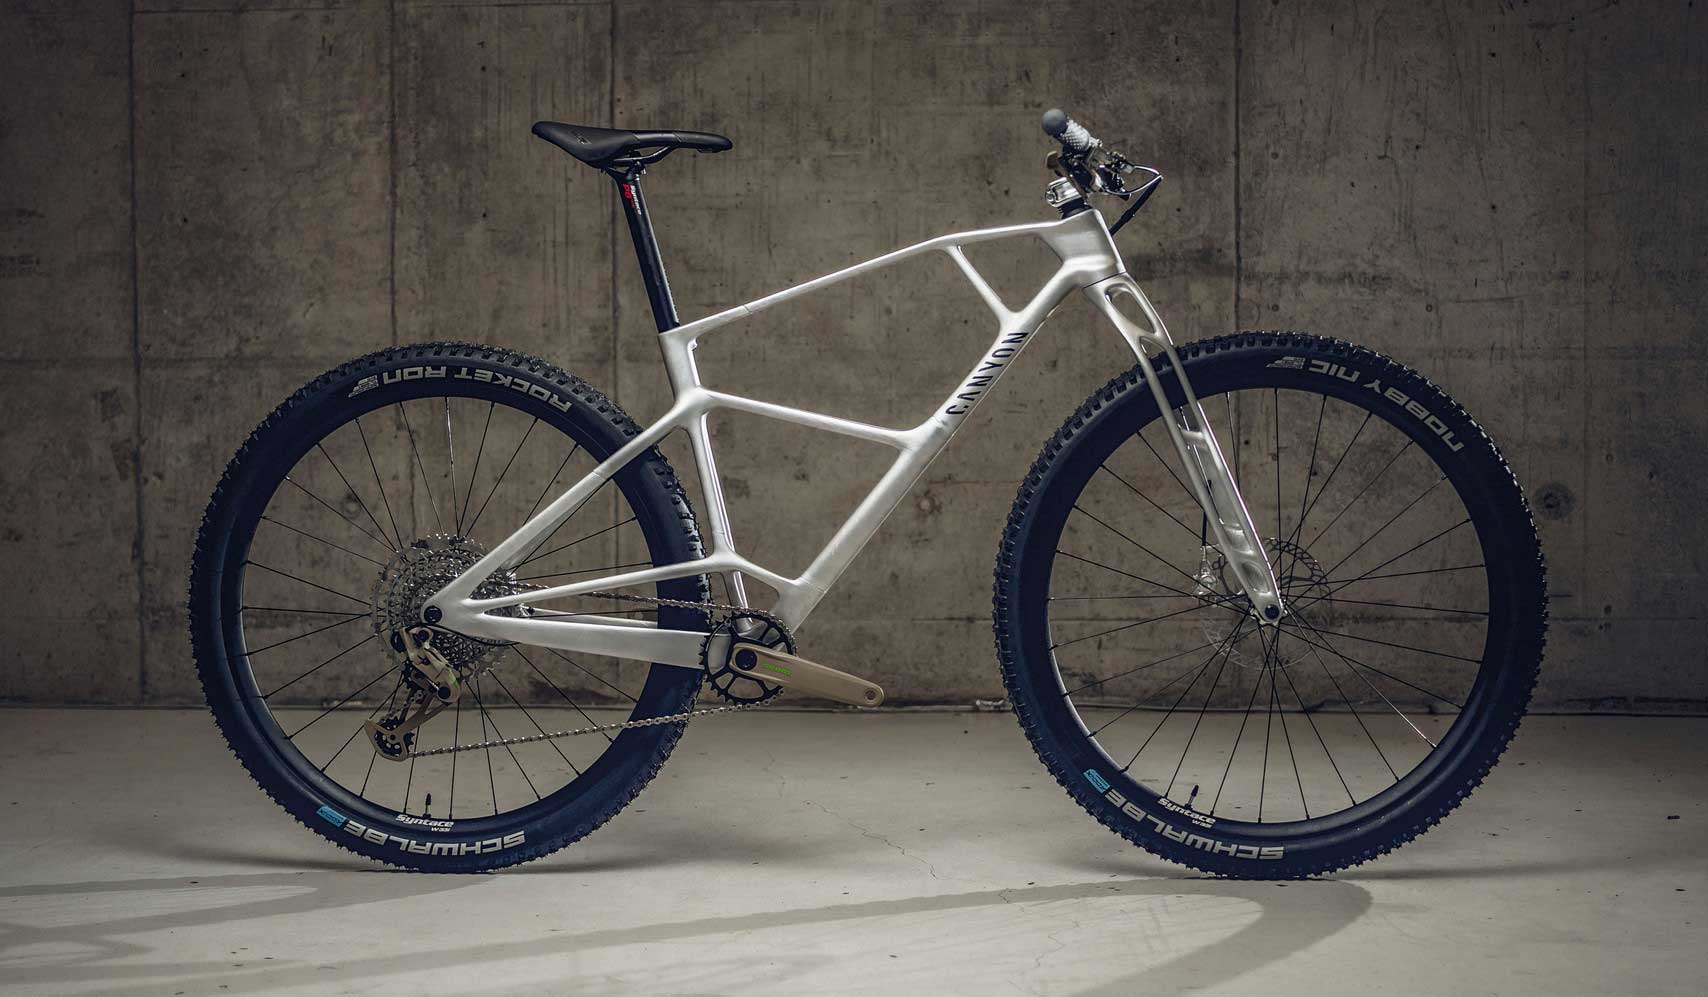 3D-printed bike frame by Canyon